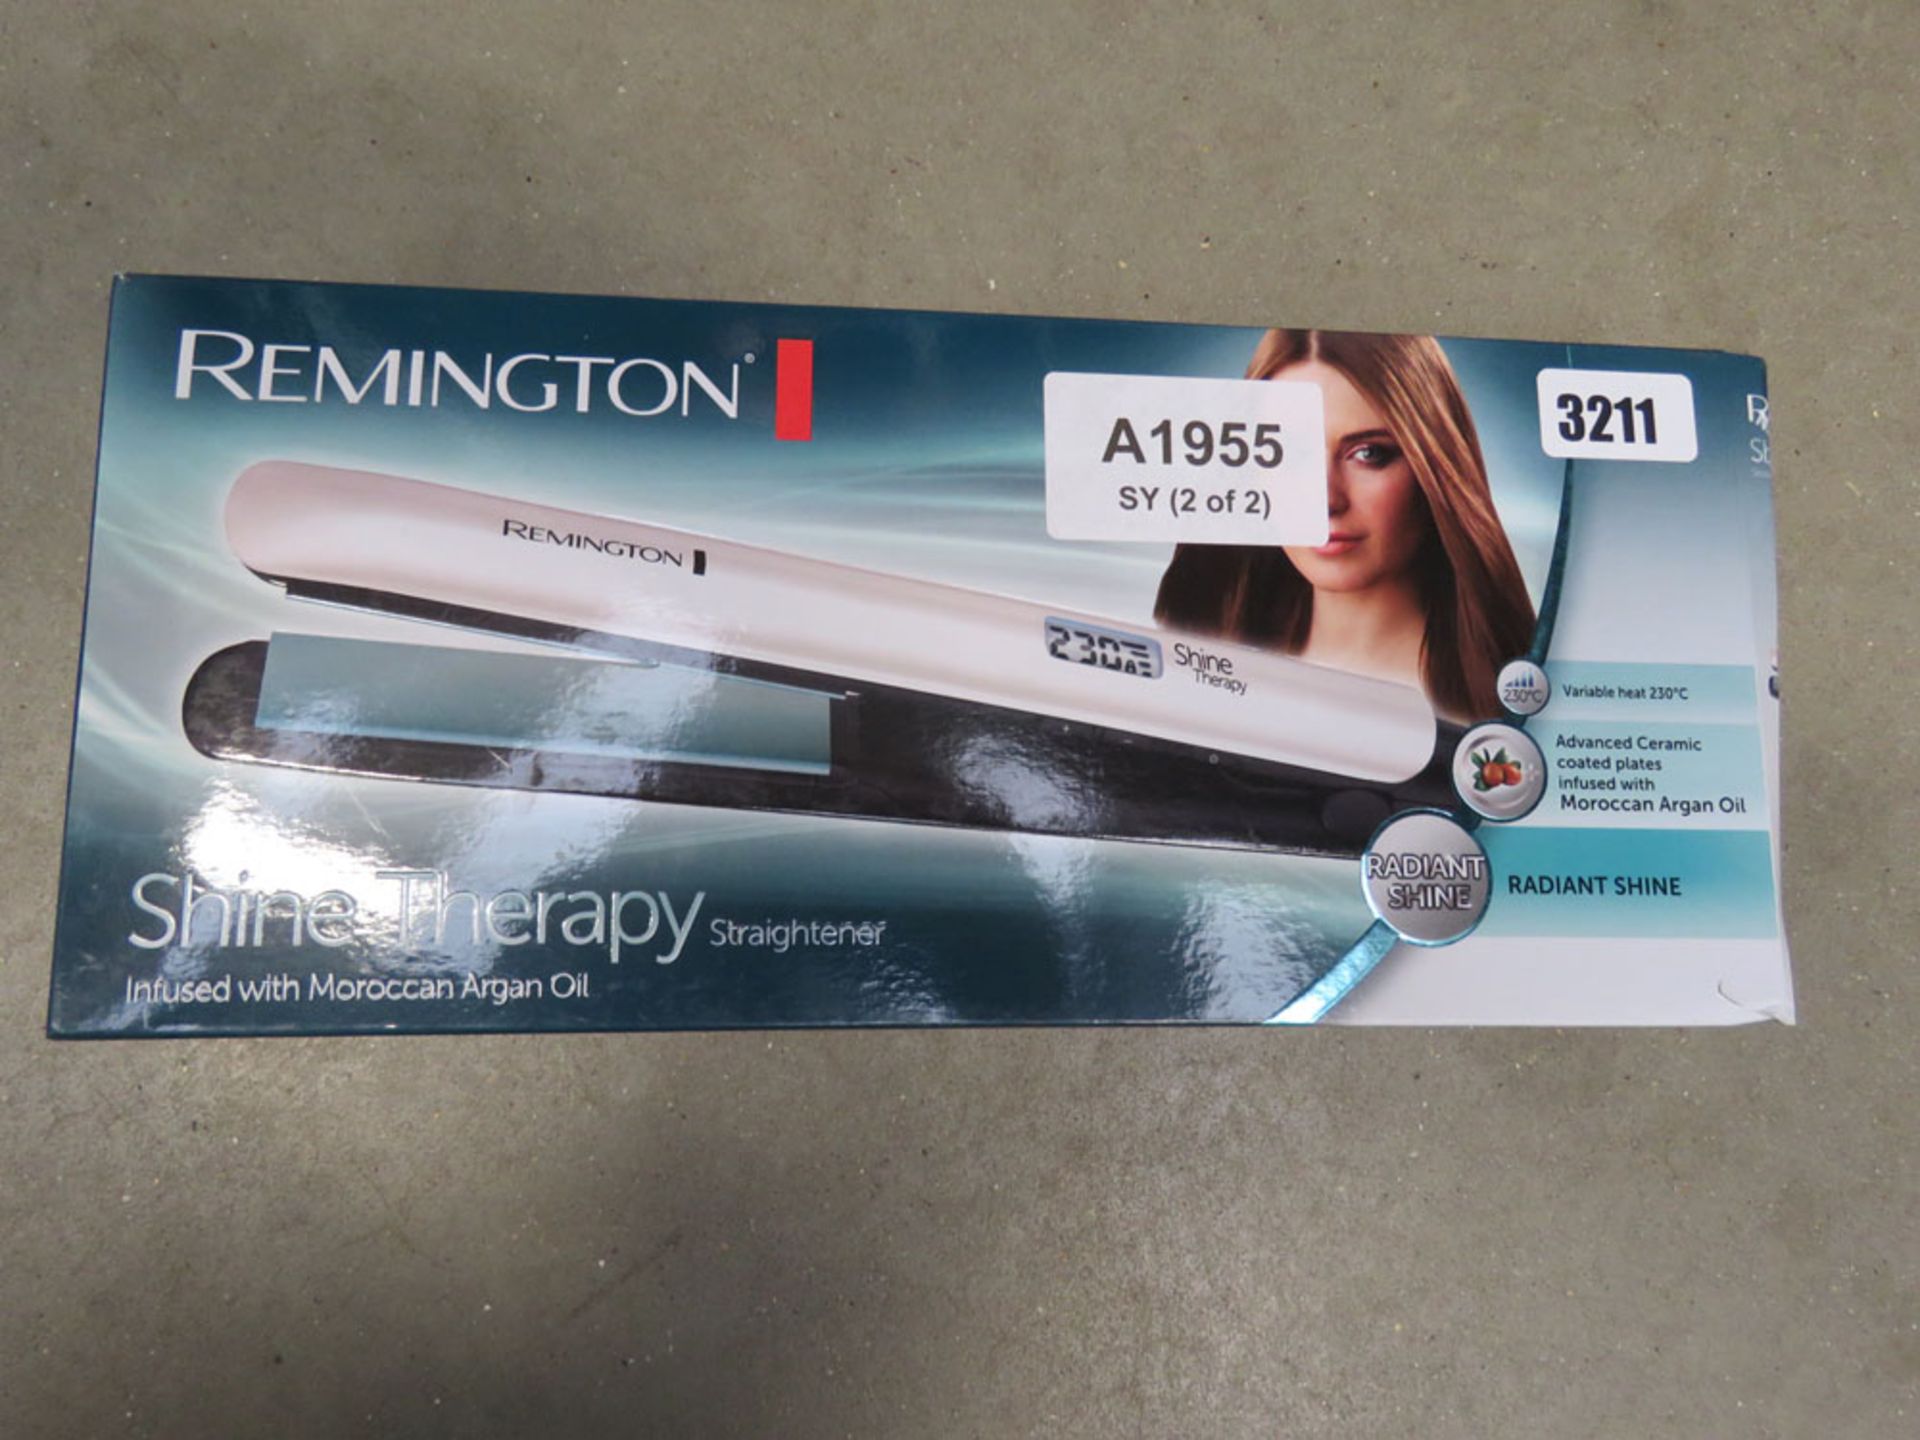 Remington hair straighteners